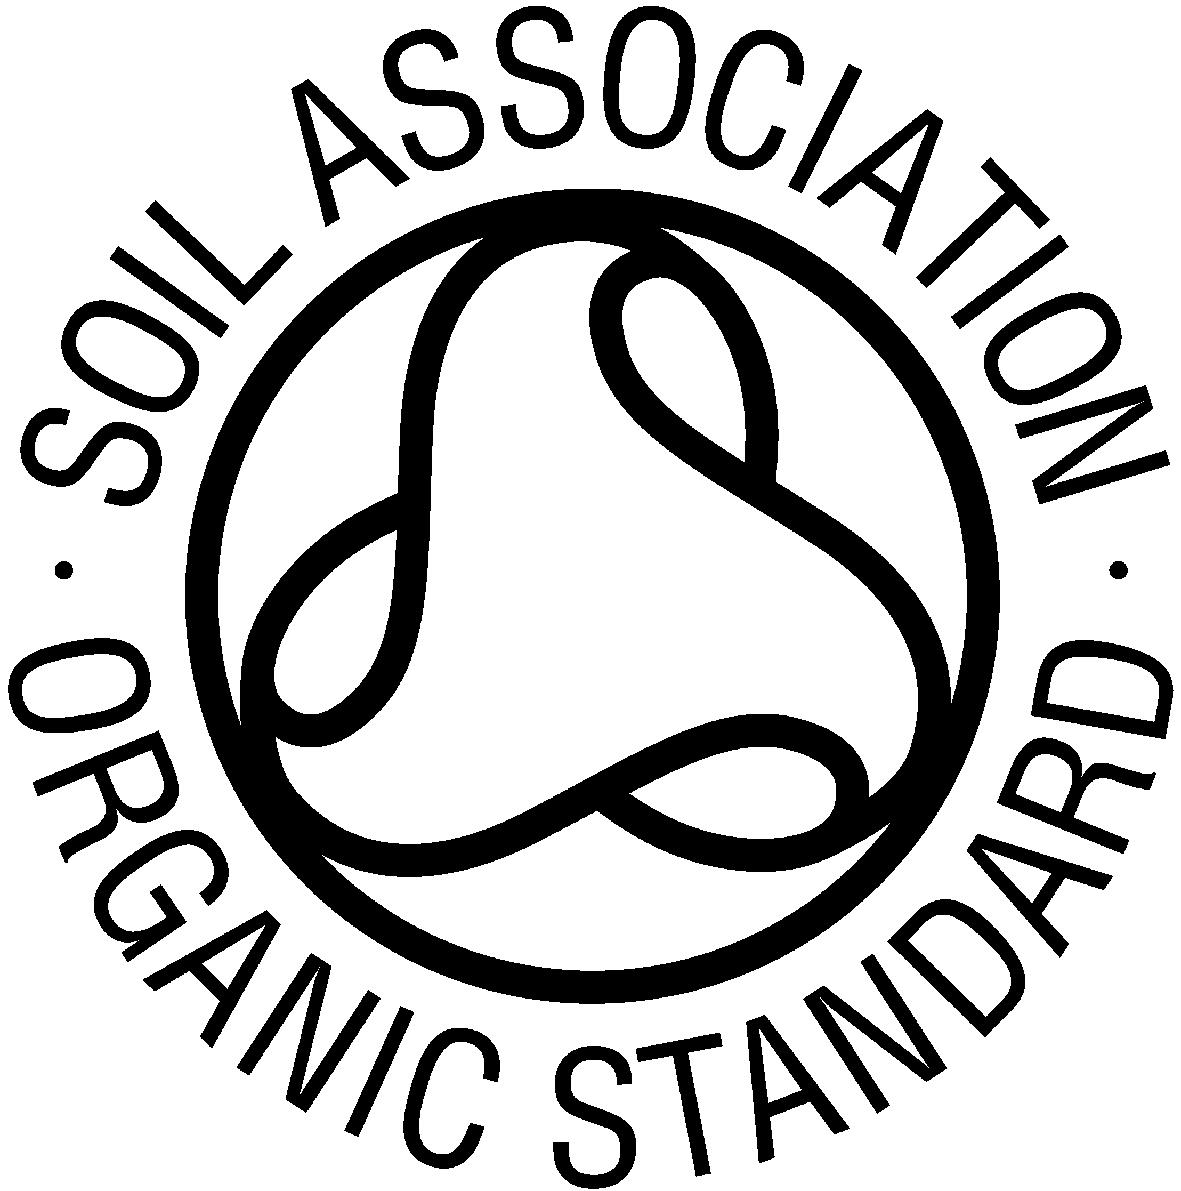 soil_association_logo